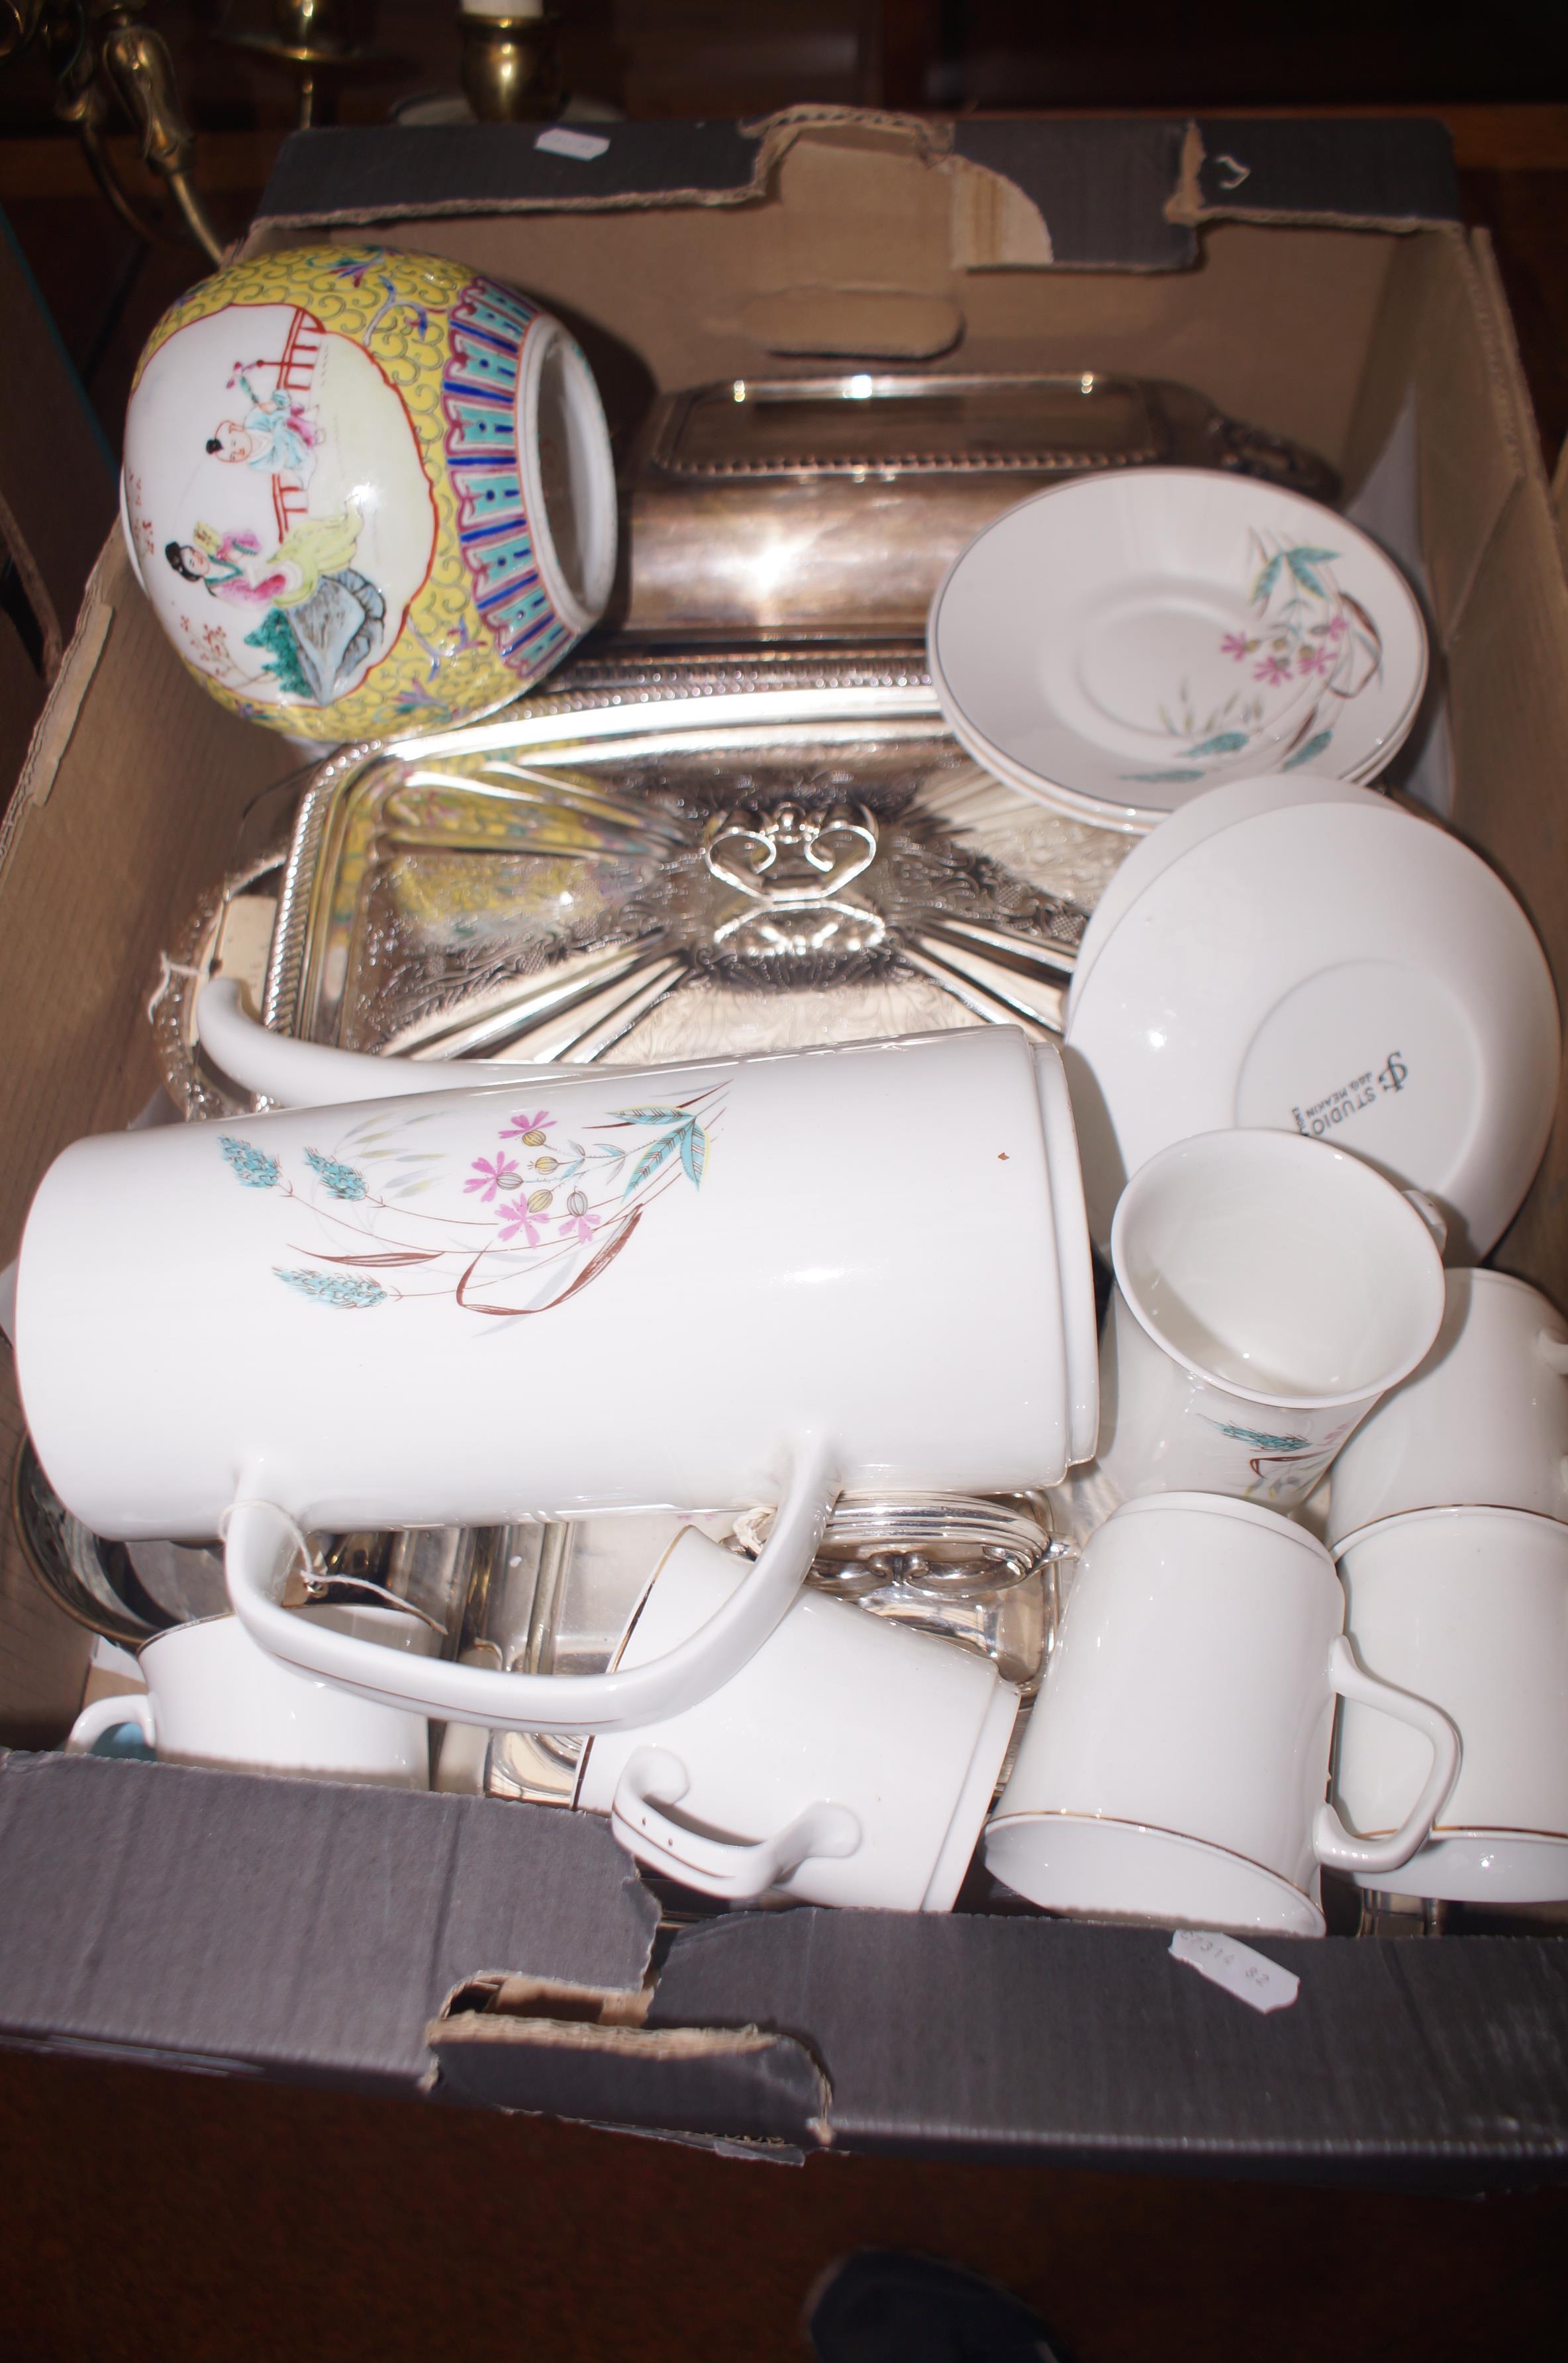 Studio pottery tea set, silver plated items & othe